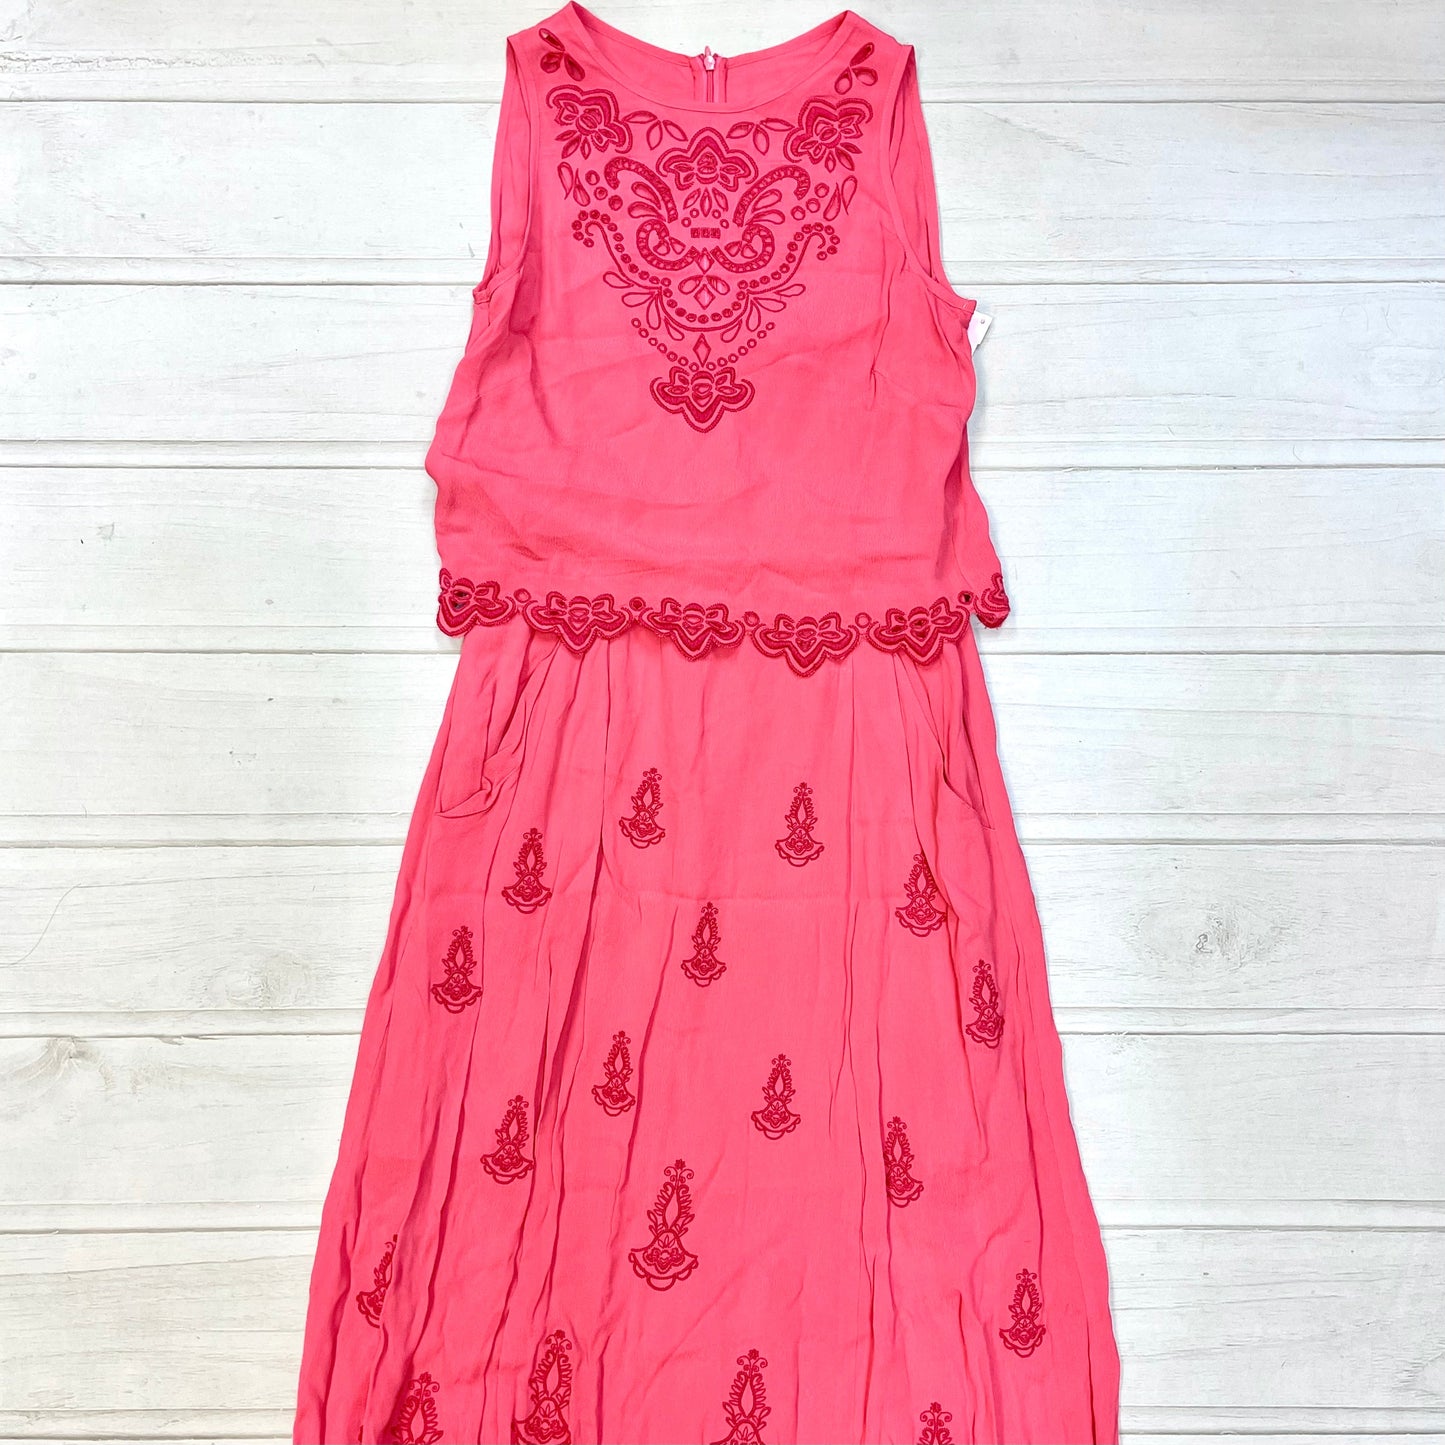 Dress Designer By Nanette Lepore  Size: S